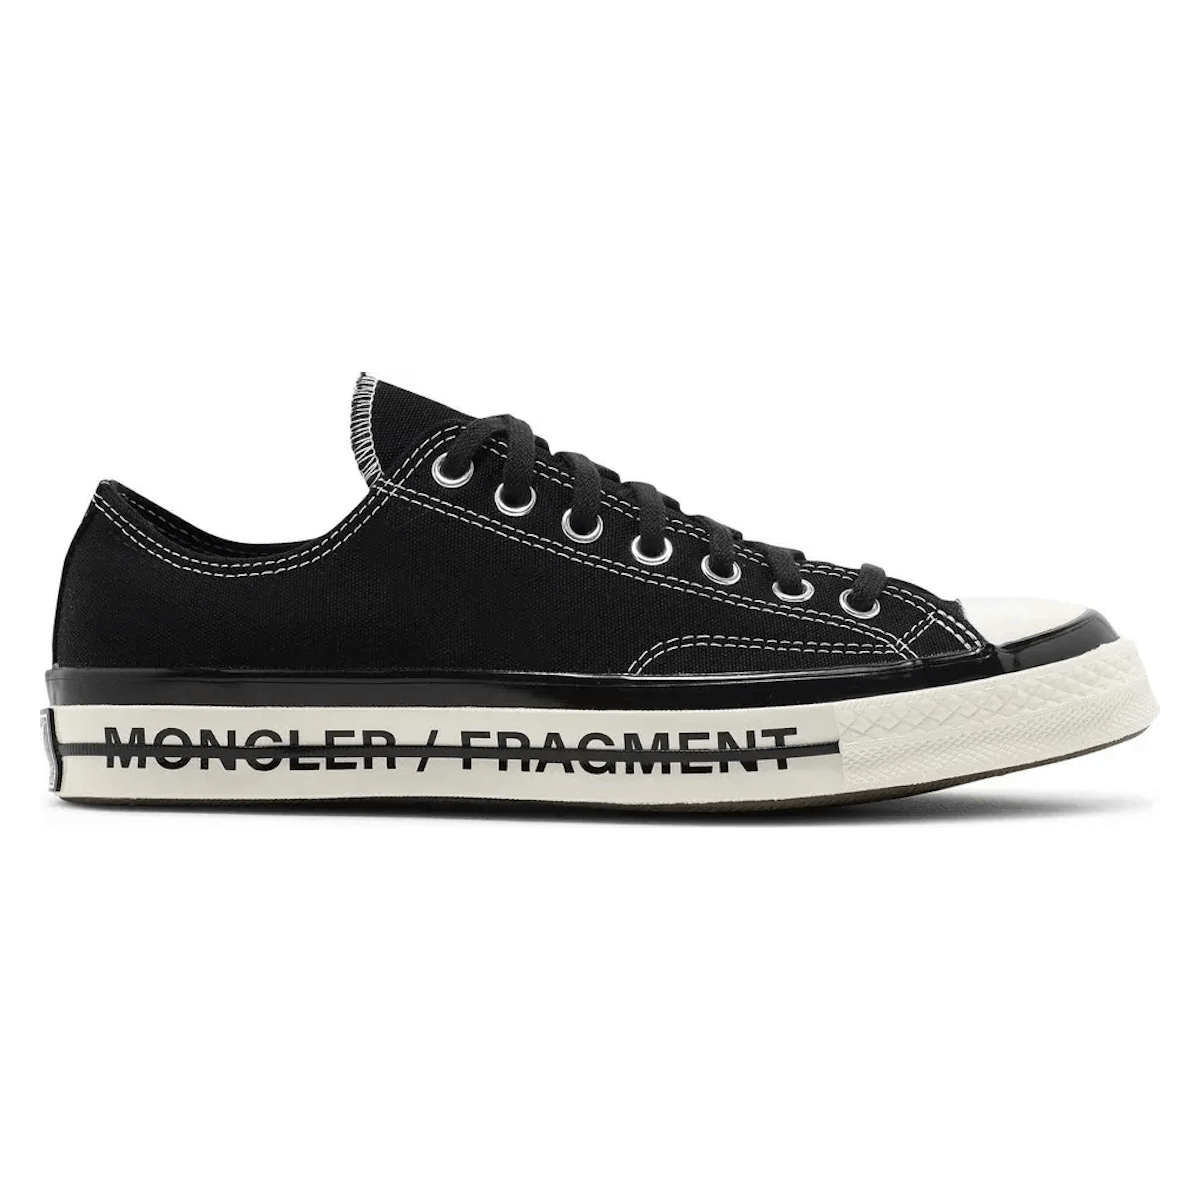 Fragment Design x Moncler x Converse Chuck 70 Low "Black"